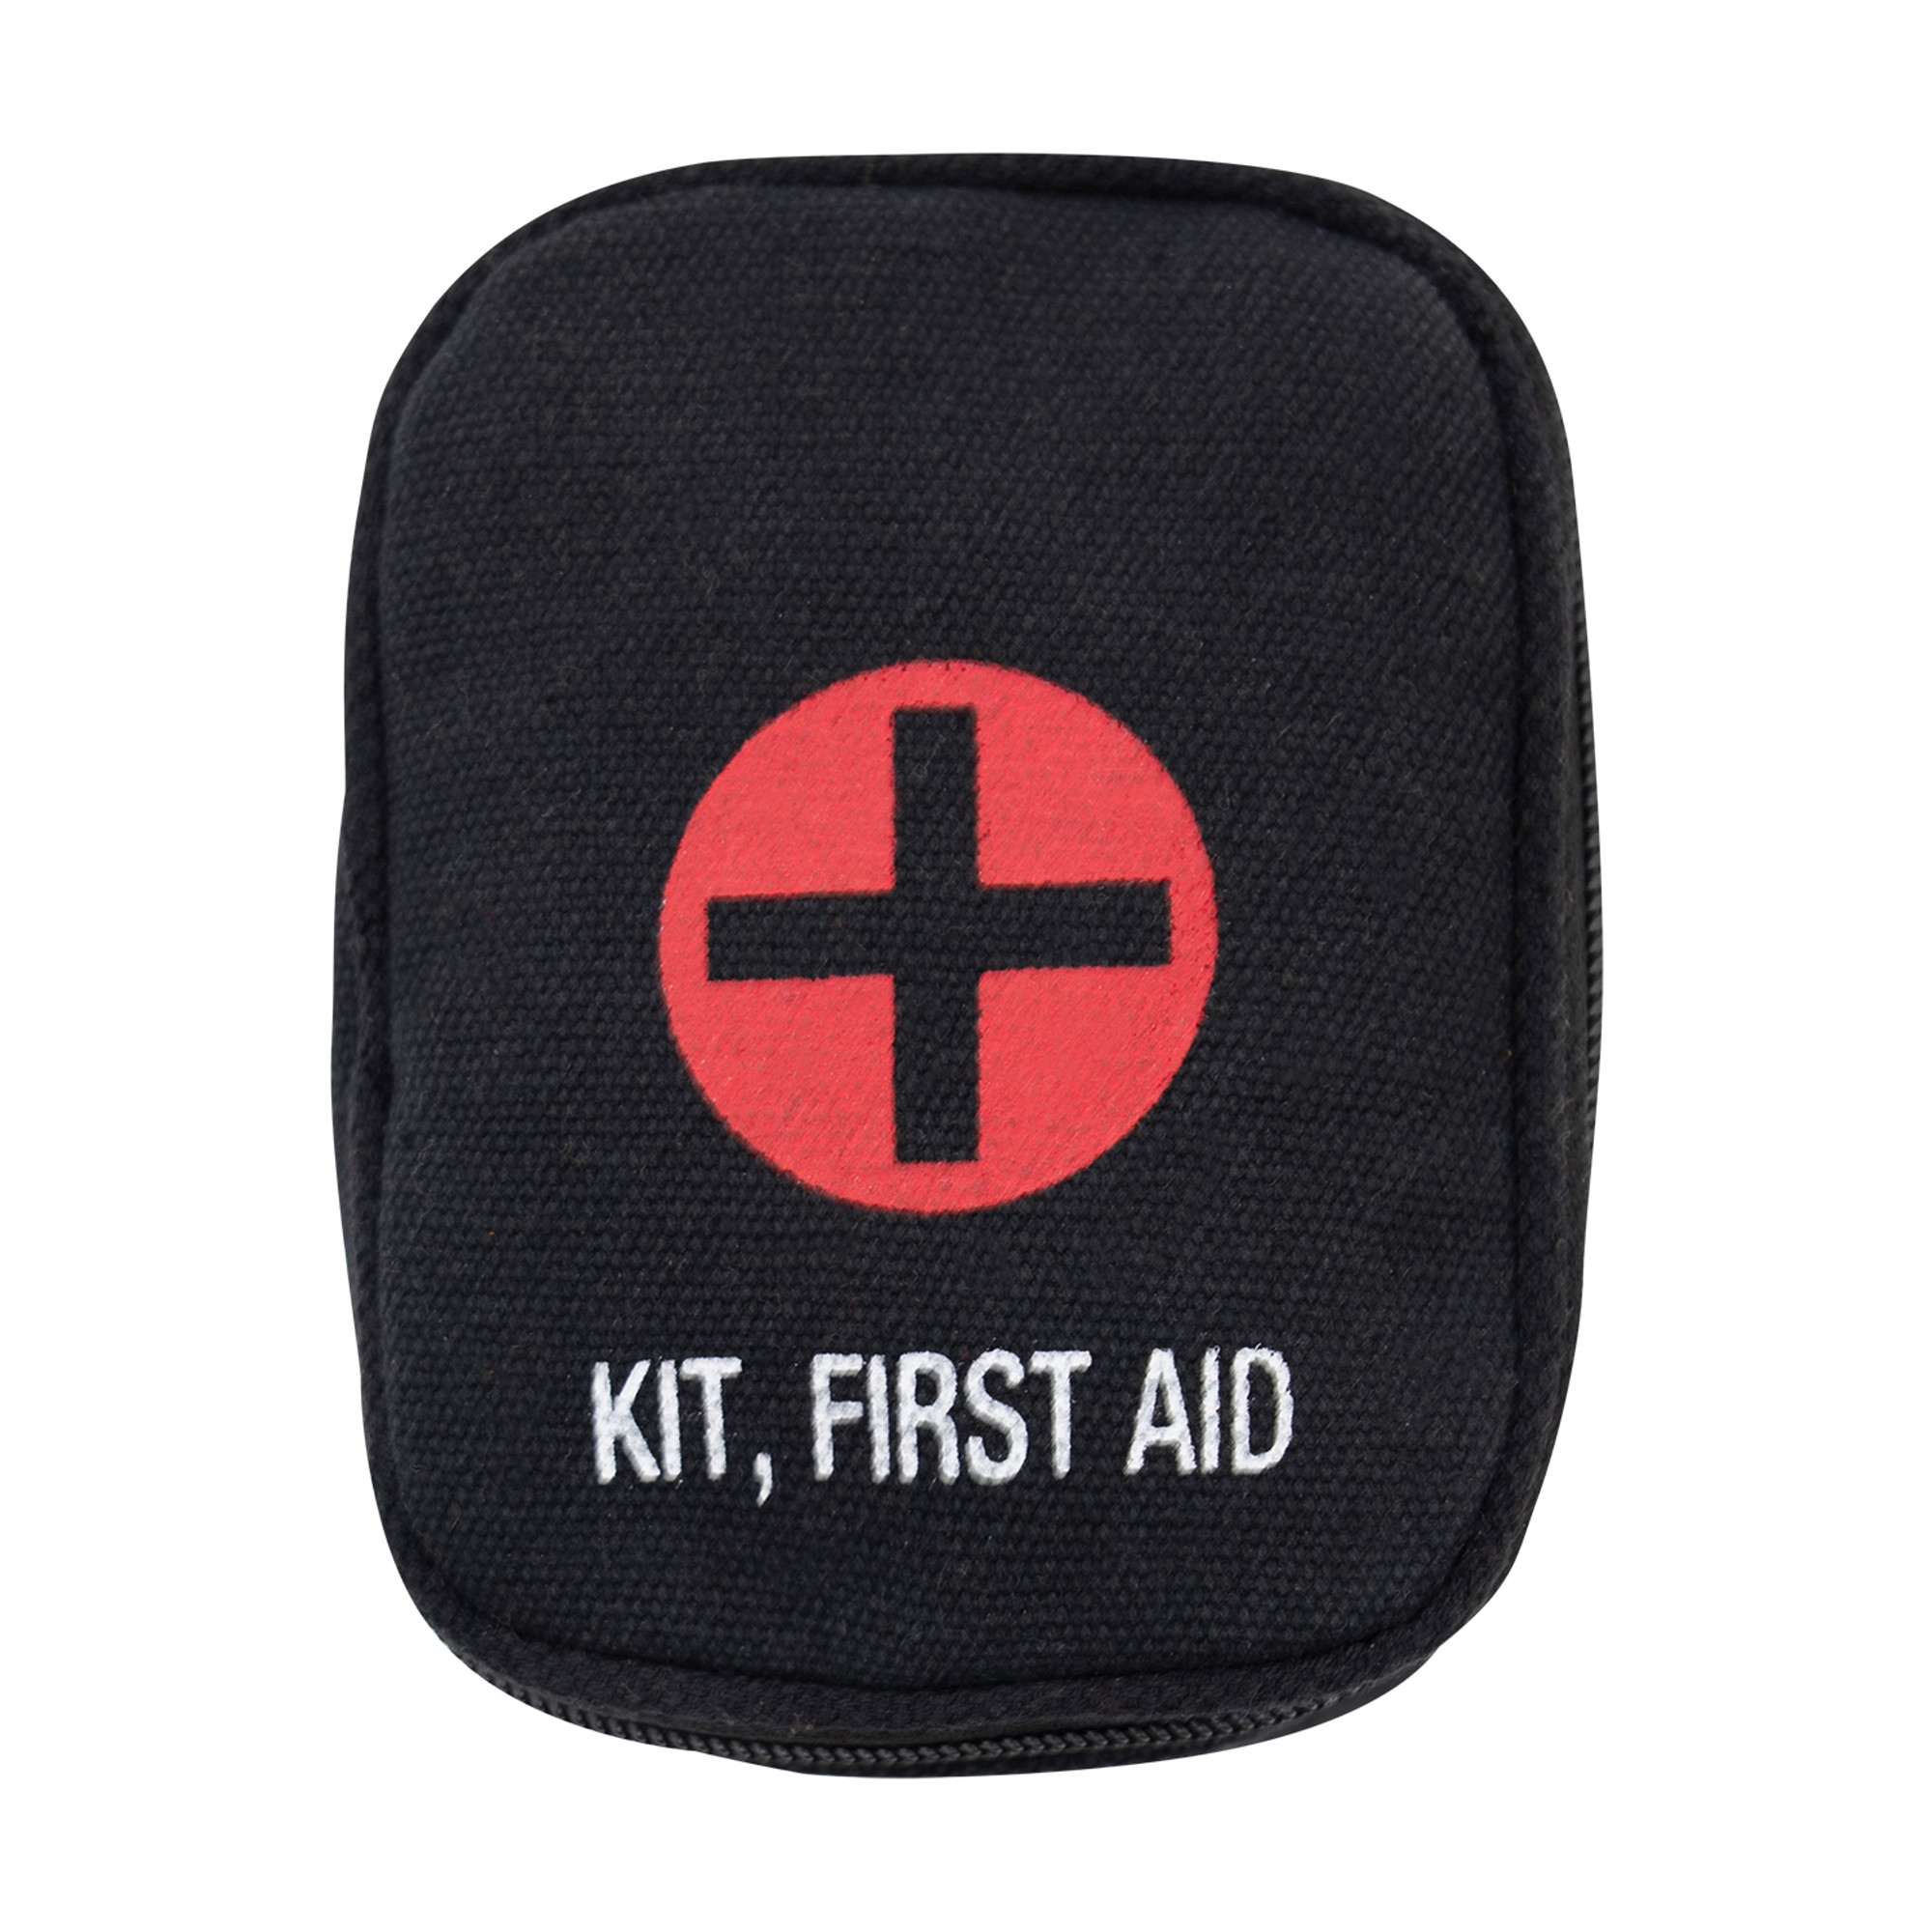 Rothco Military Zipper First Aid Kit - Black